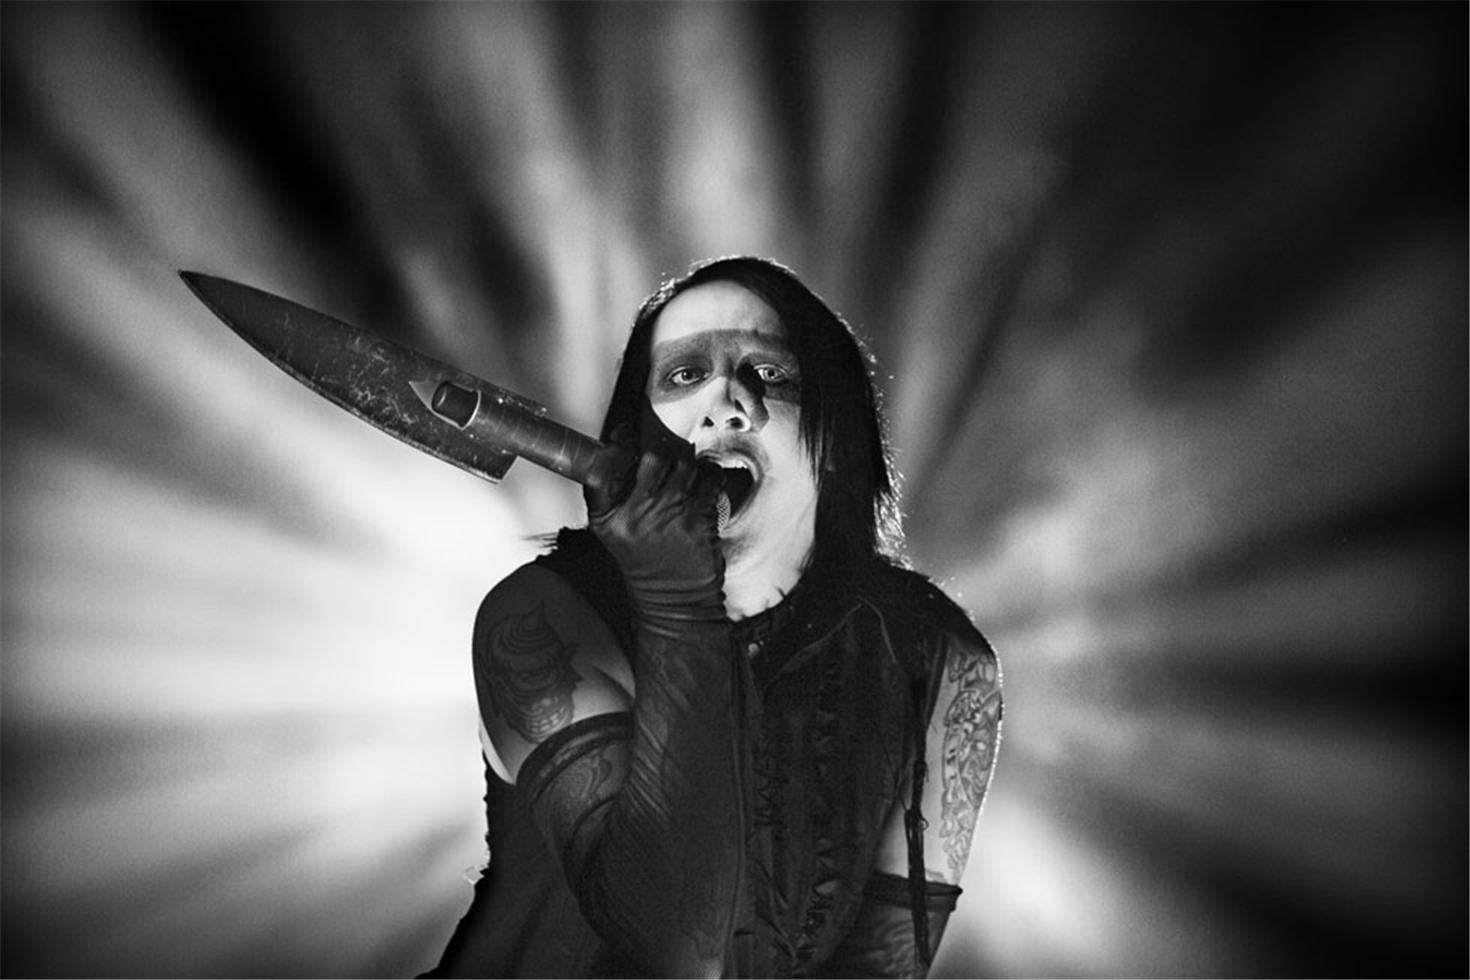 Rene Huemer Black and White Photograph - Marilyn Manson, Vienna, Austria, 2007